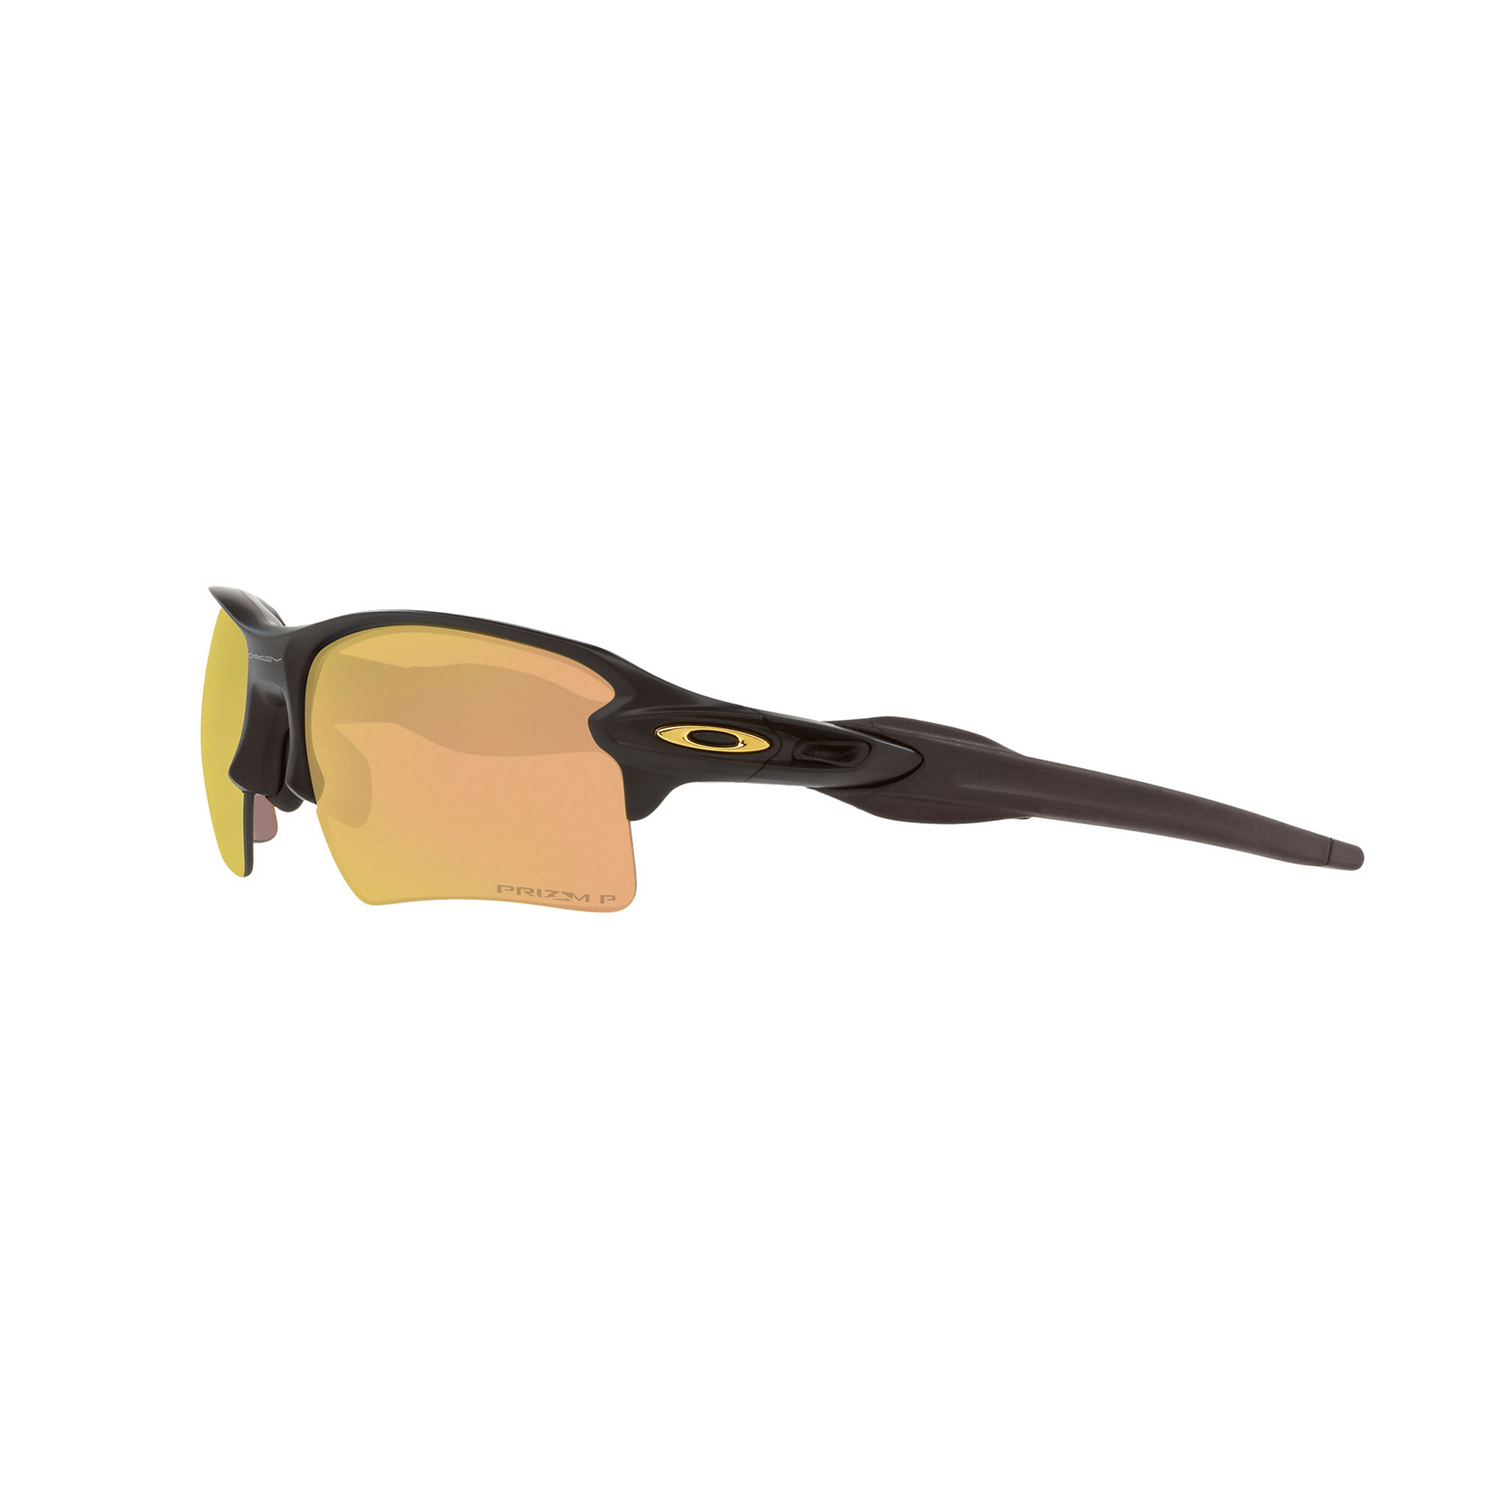 Flak 2.0 Rectangle Sunglasses XL